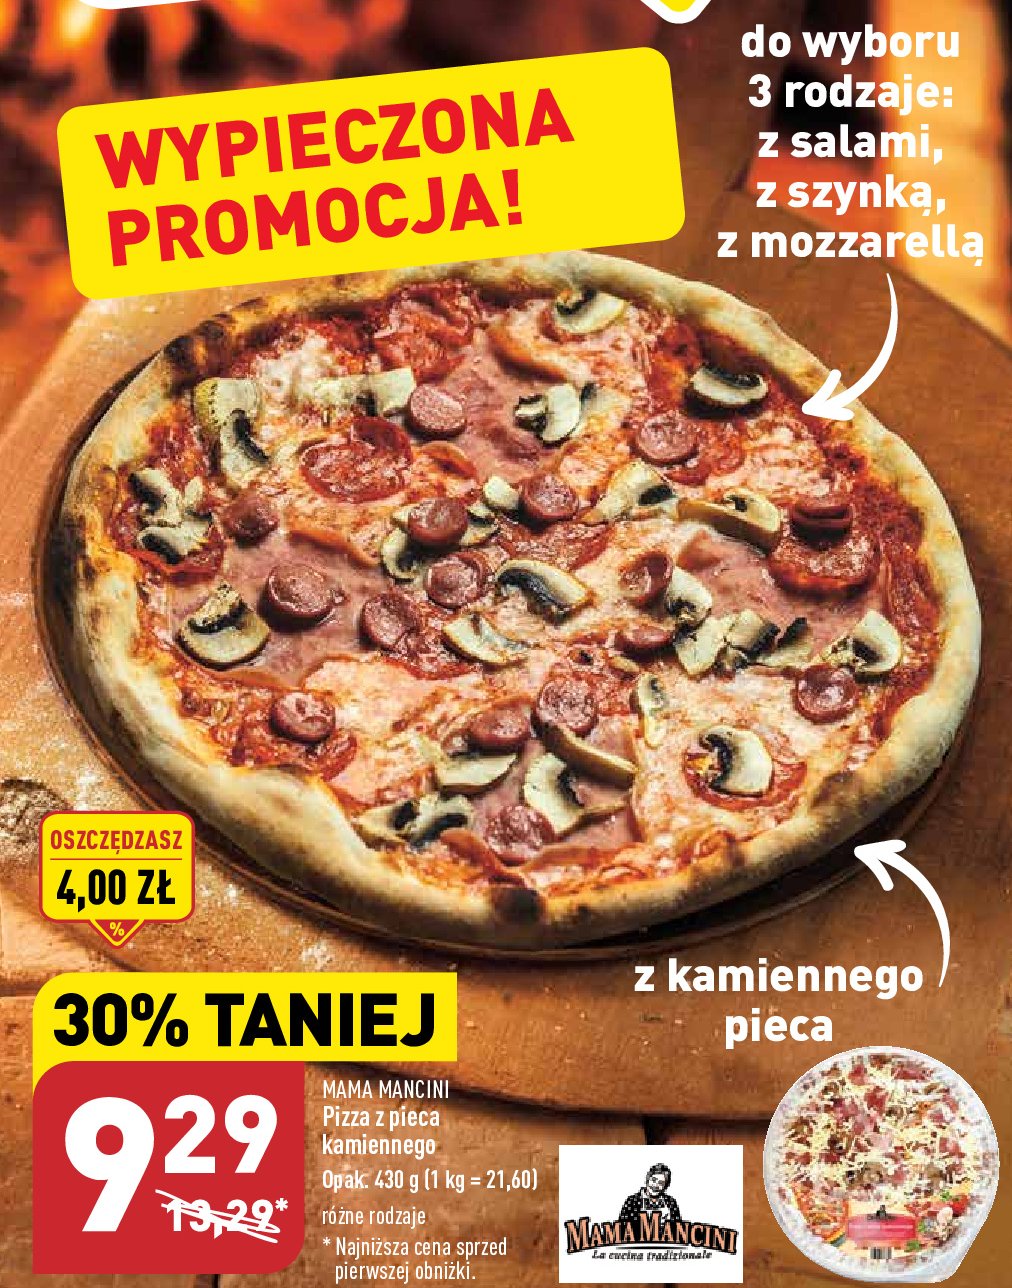 Pizza z mozzarellą Mama mancini promocja